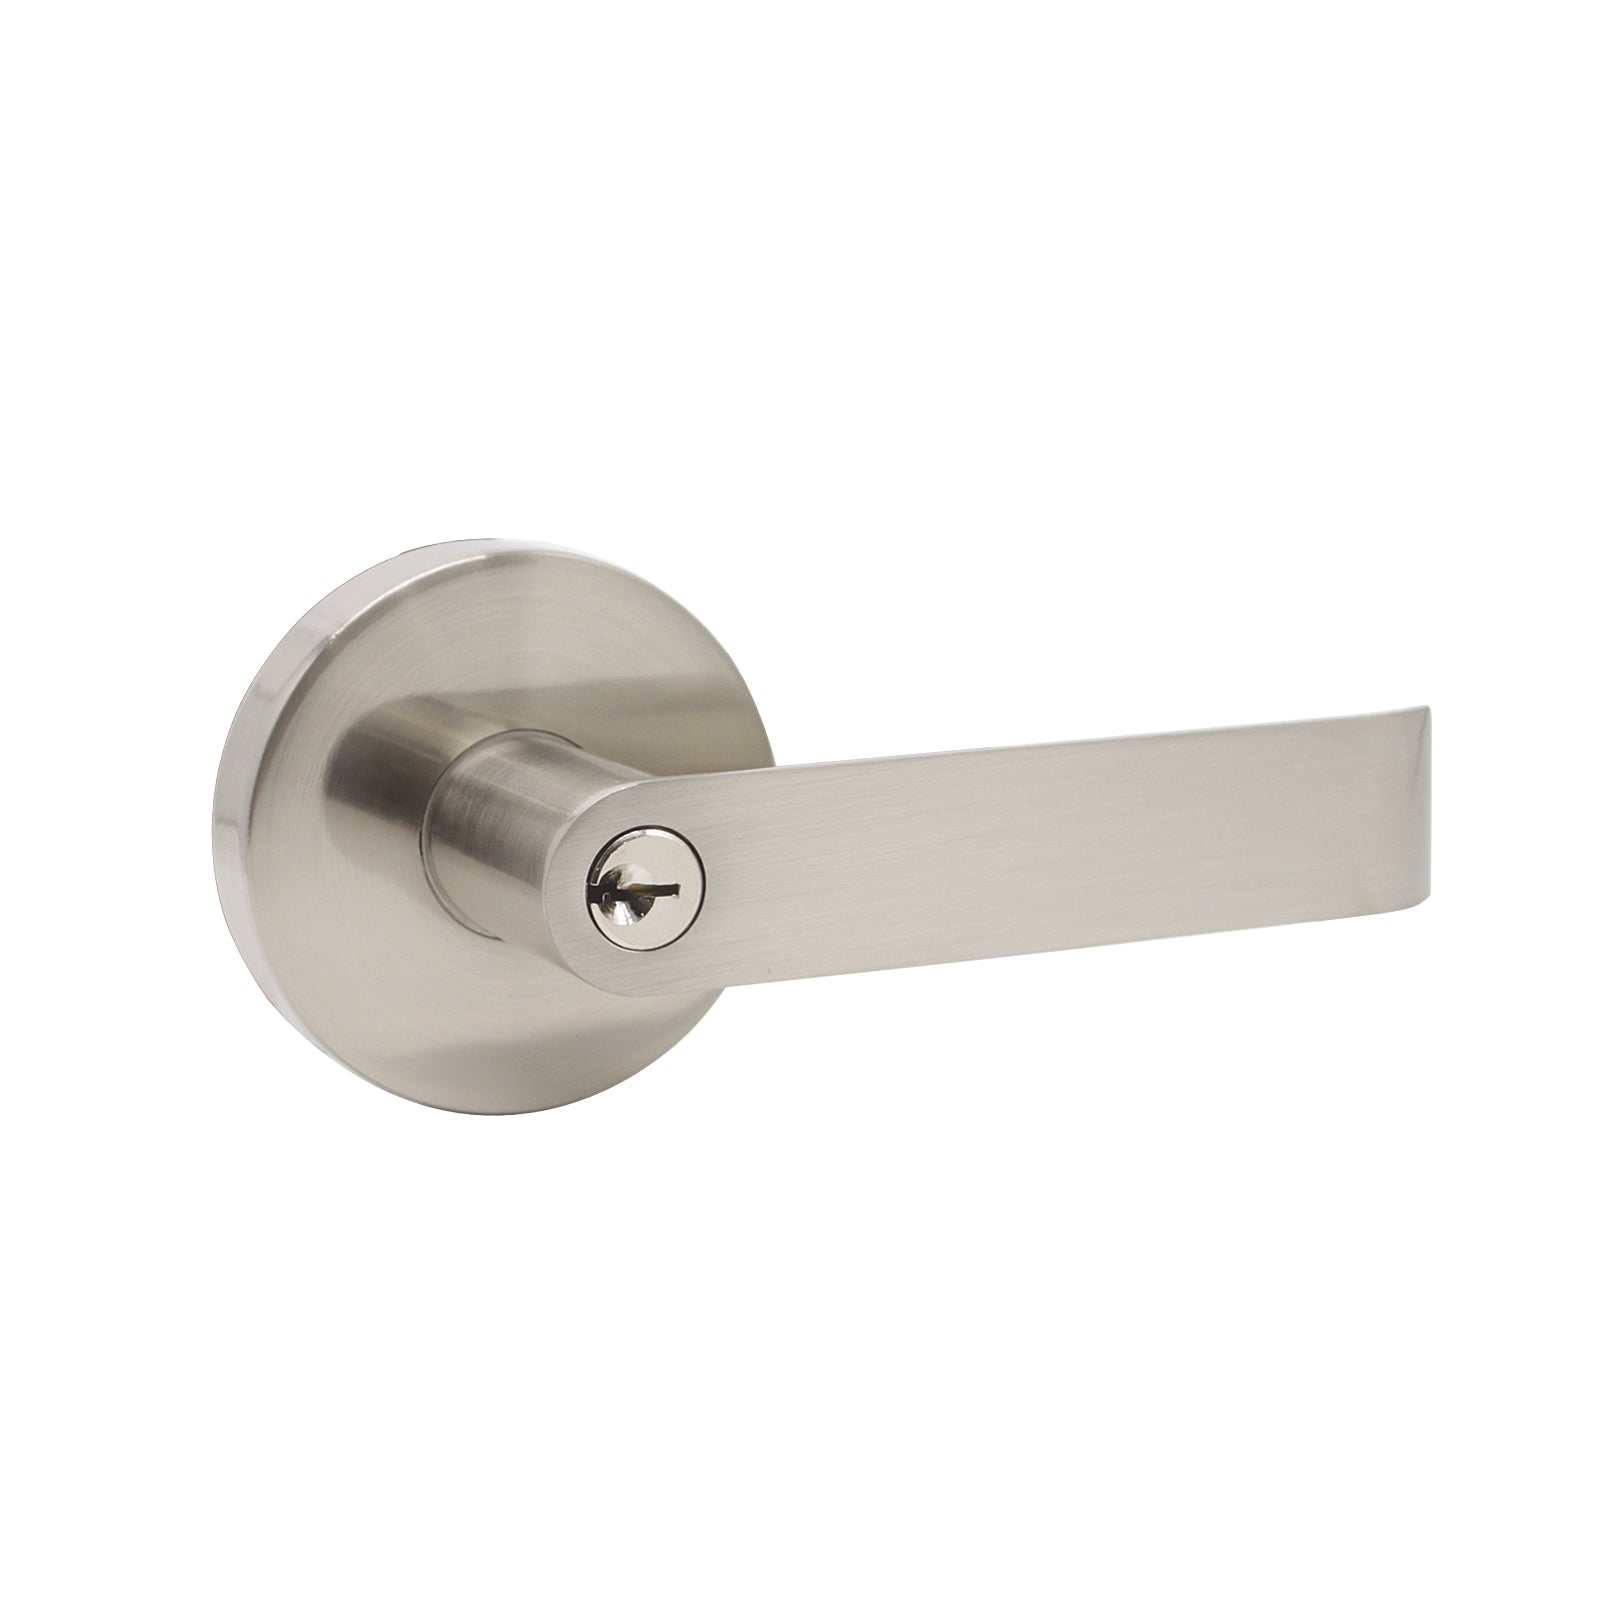 Heavy Duty Entry Keyed Door Lever Lock set Satin Nickel Finish - Keyed Alike DL02SNET